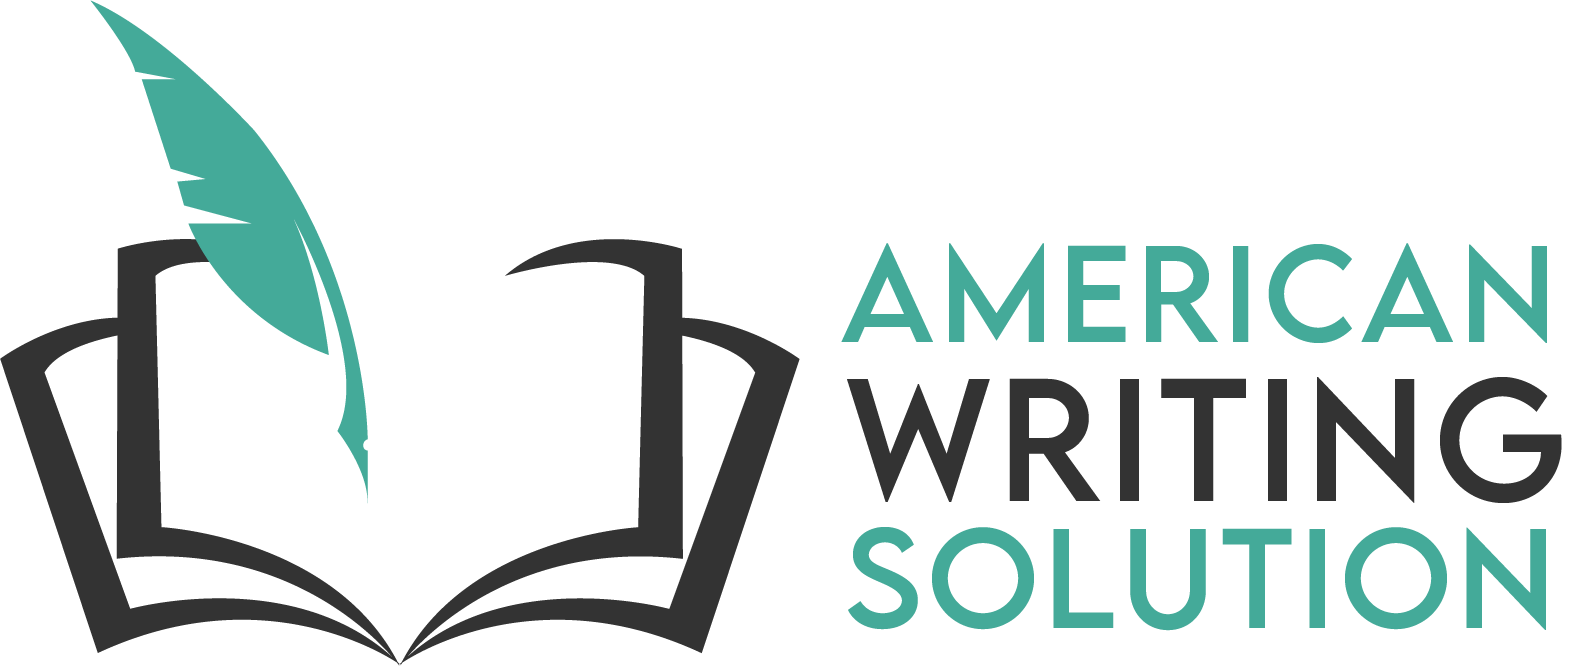 American Writing Solution Logo